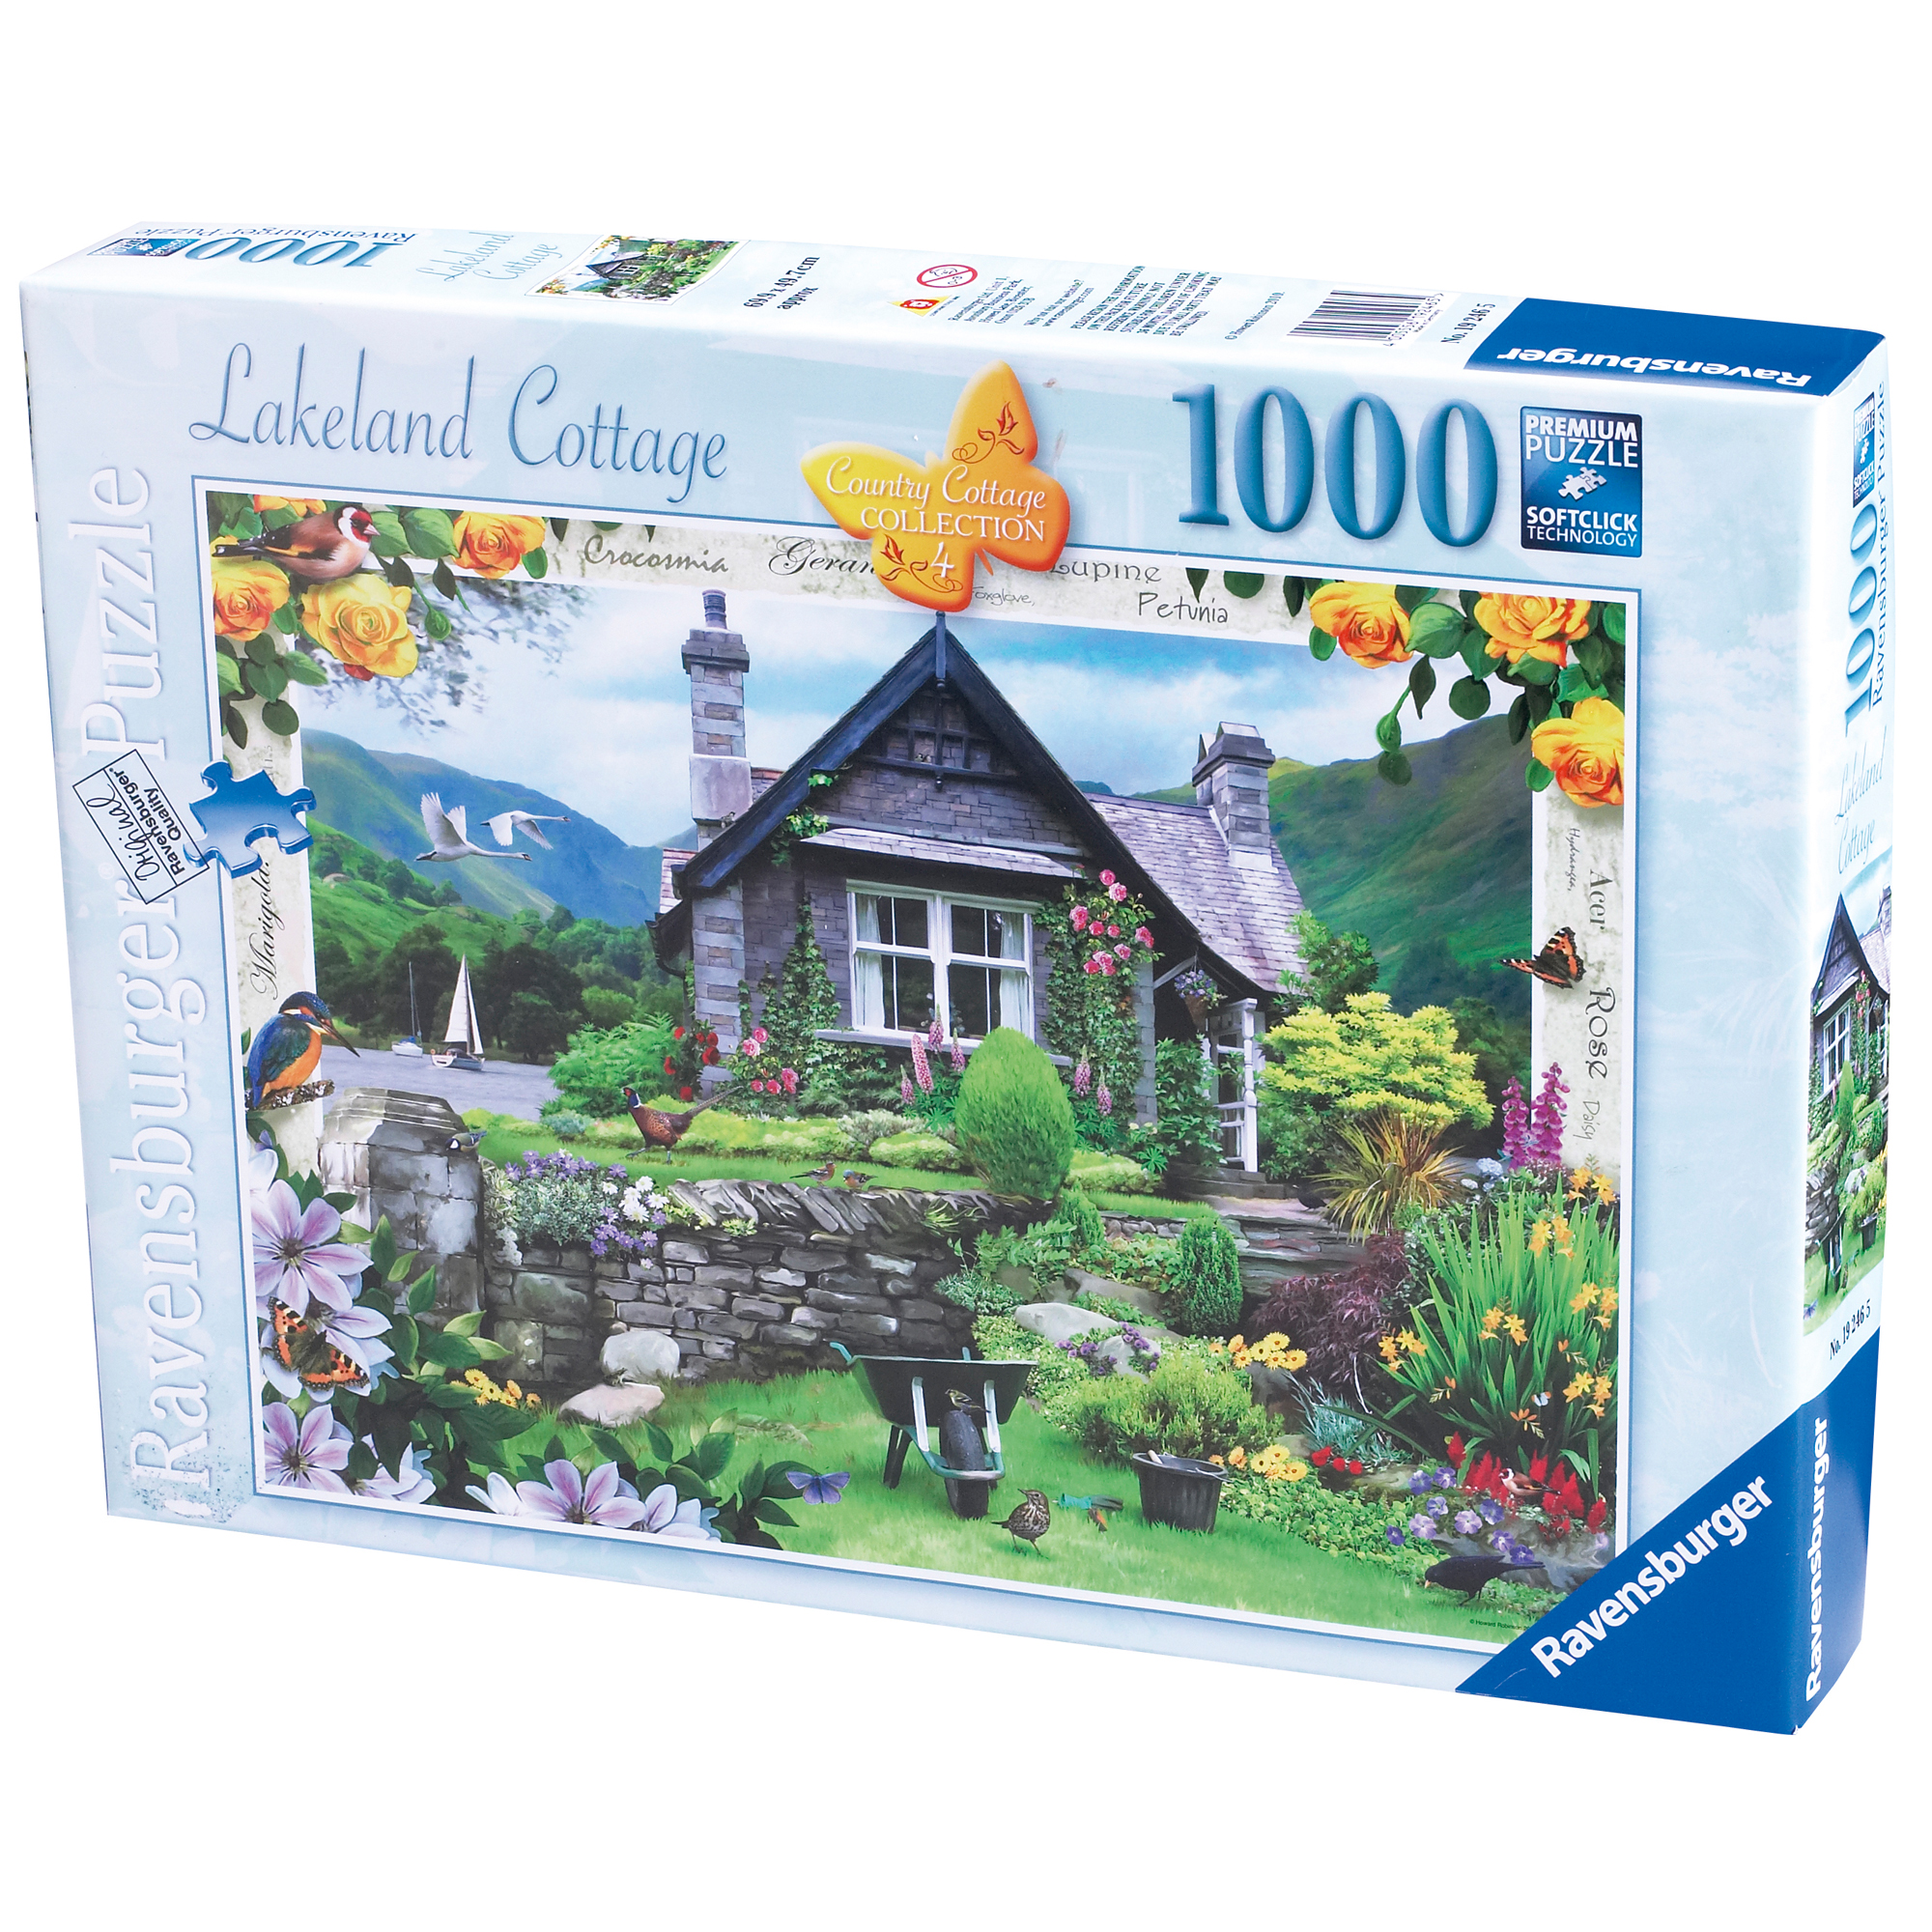 The Lakeland Cottage 1000pc Puzzle